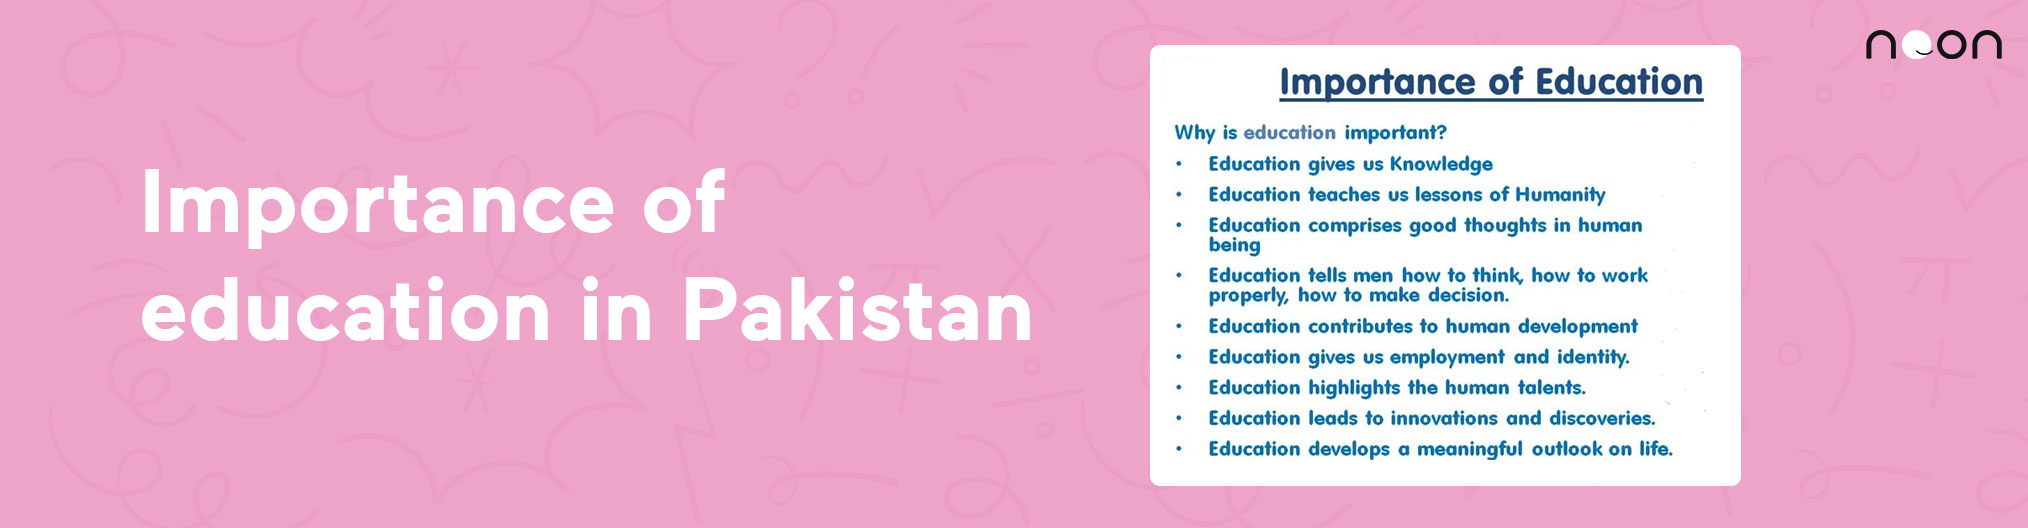 Importance of education in Pakistan 